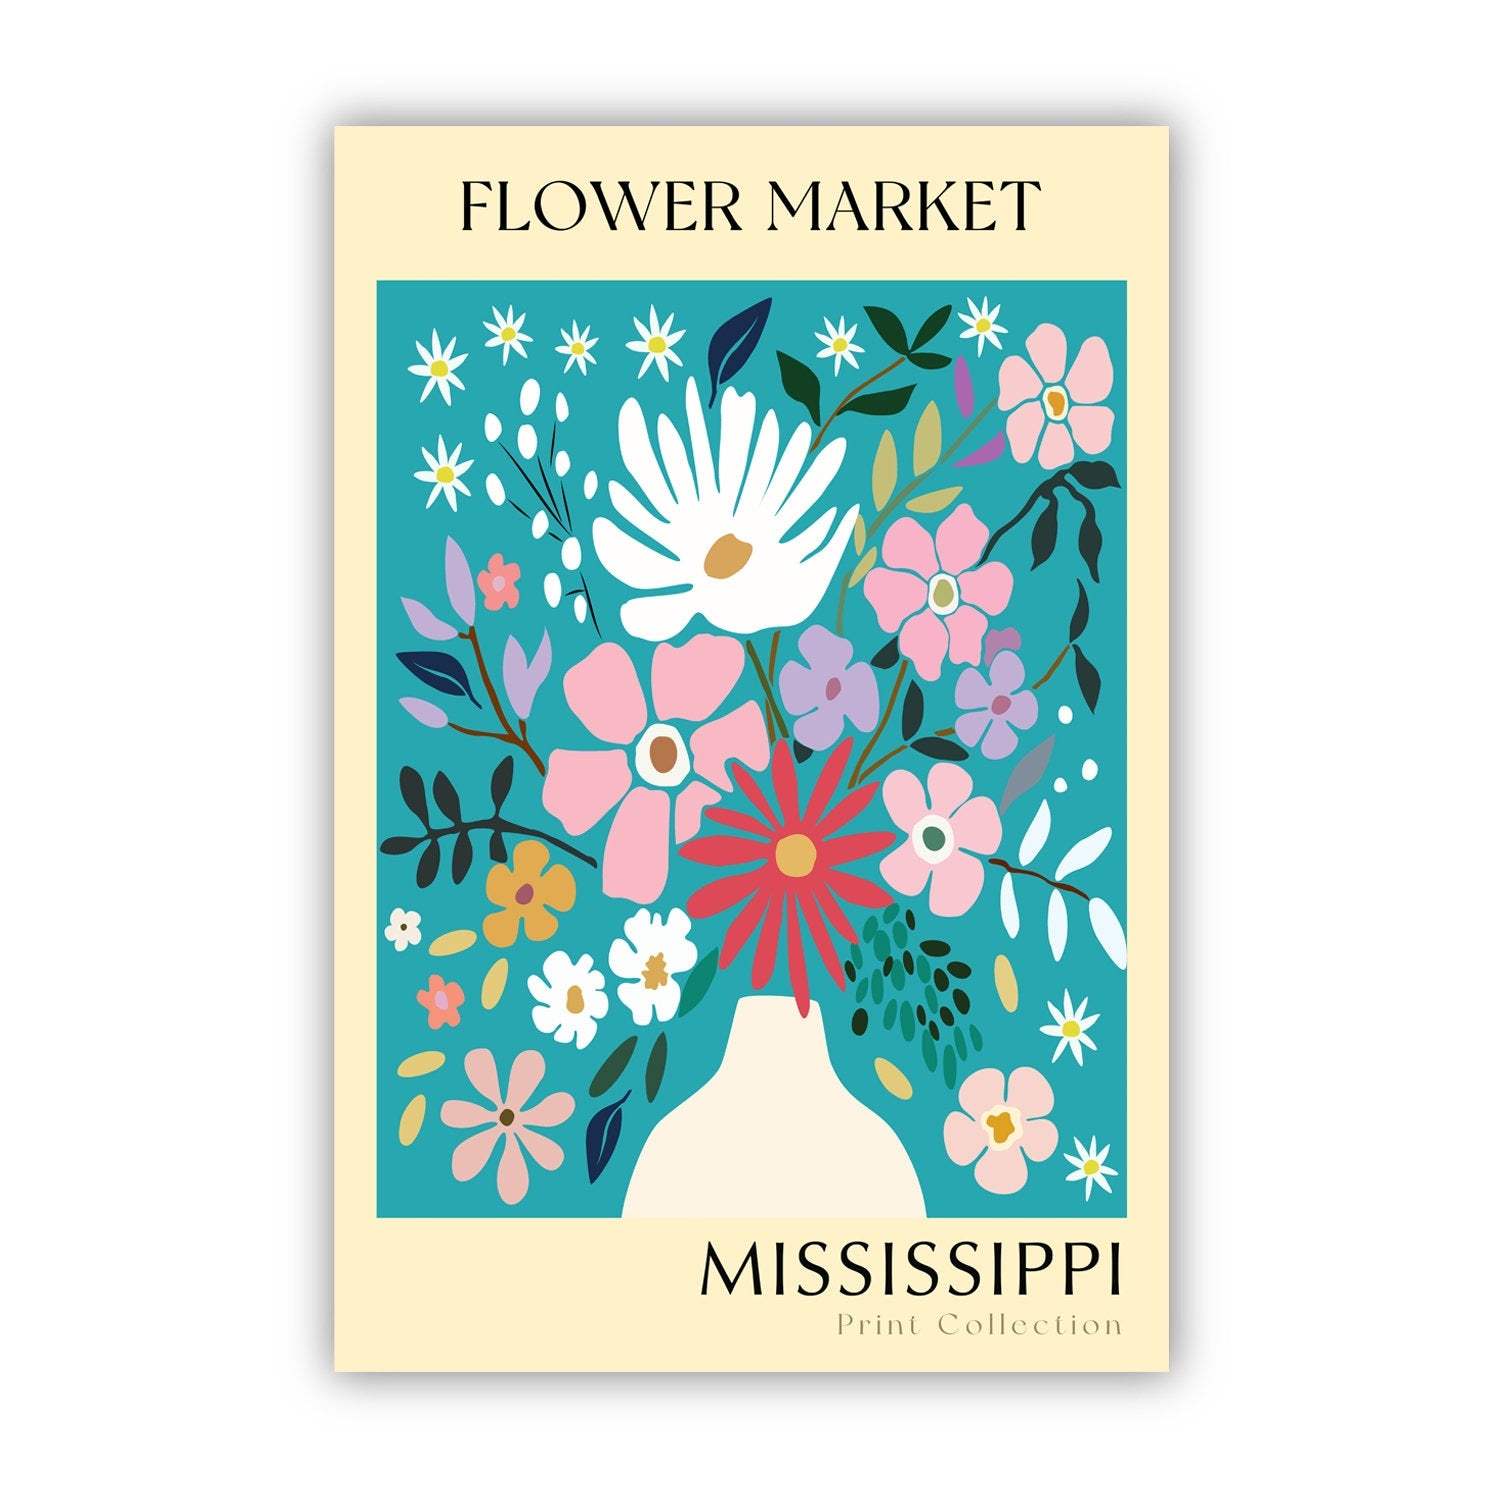 Mississippi State flower print, USA state poster, Mississippi flower market poster, Botanical poster, Nature poster artwork, Boho floral art